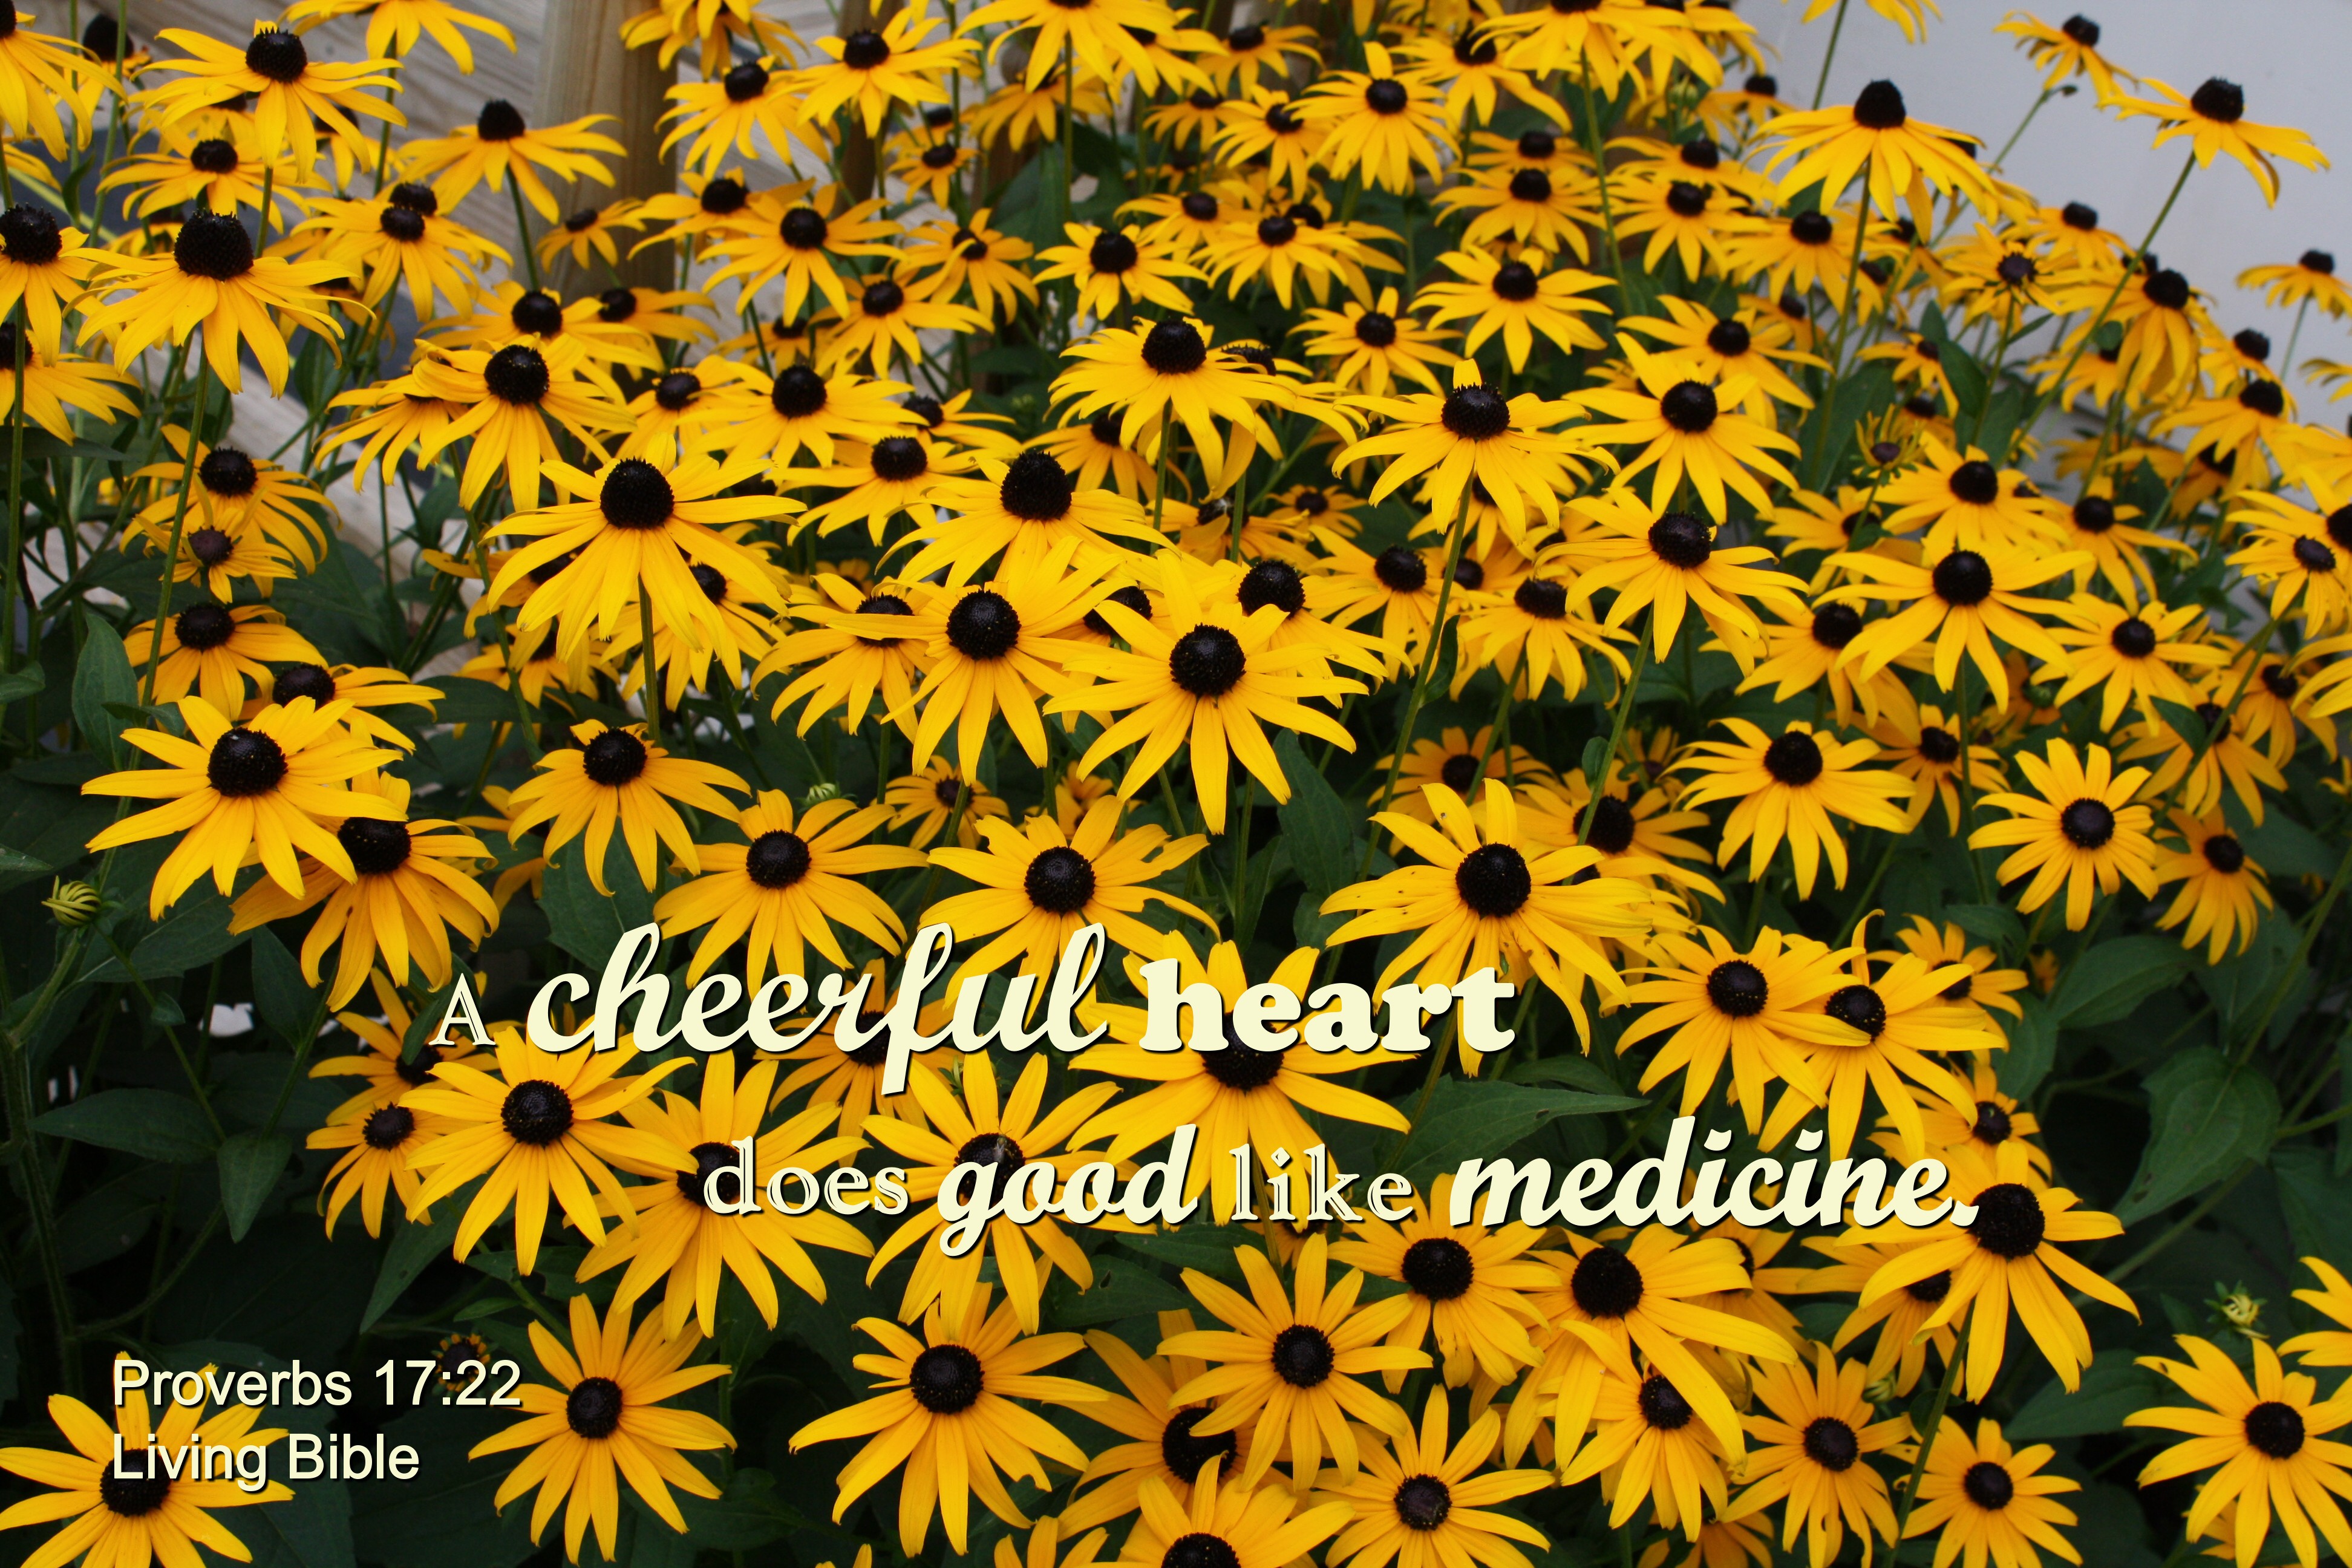 Merry heart like medicine photo